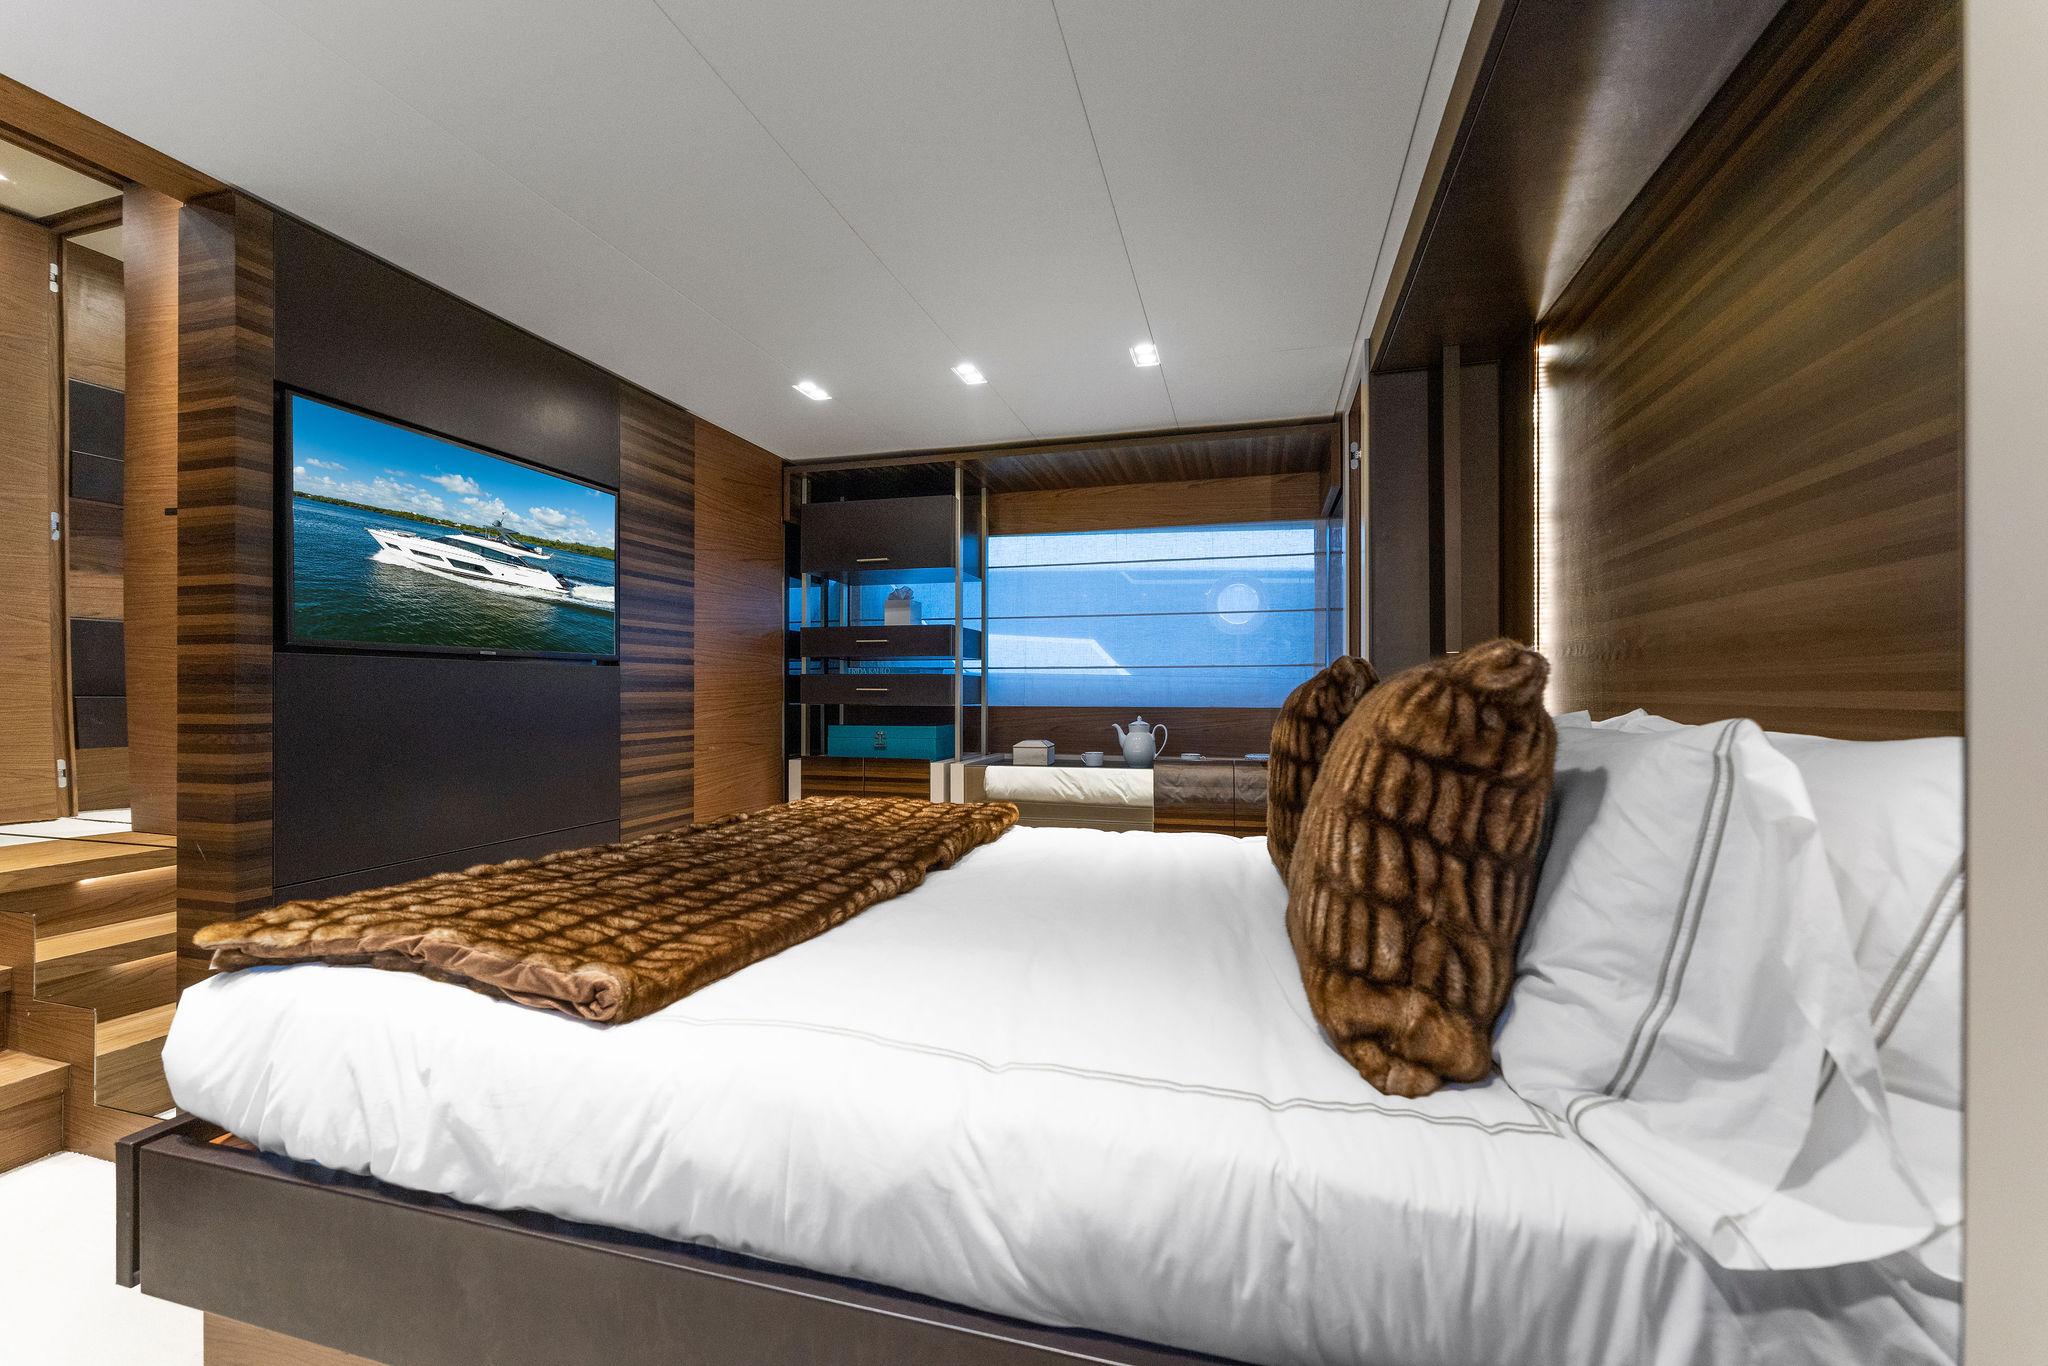 2019 Ferretti Yachts 670 Legend